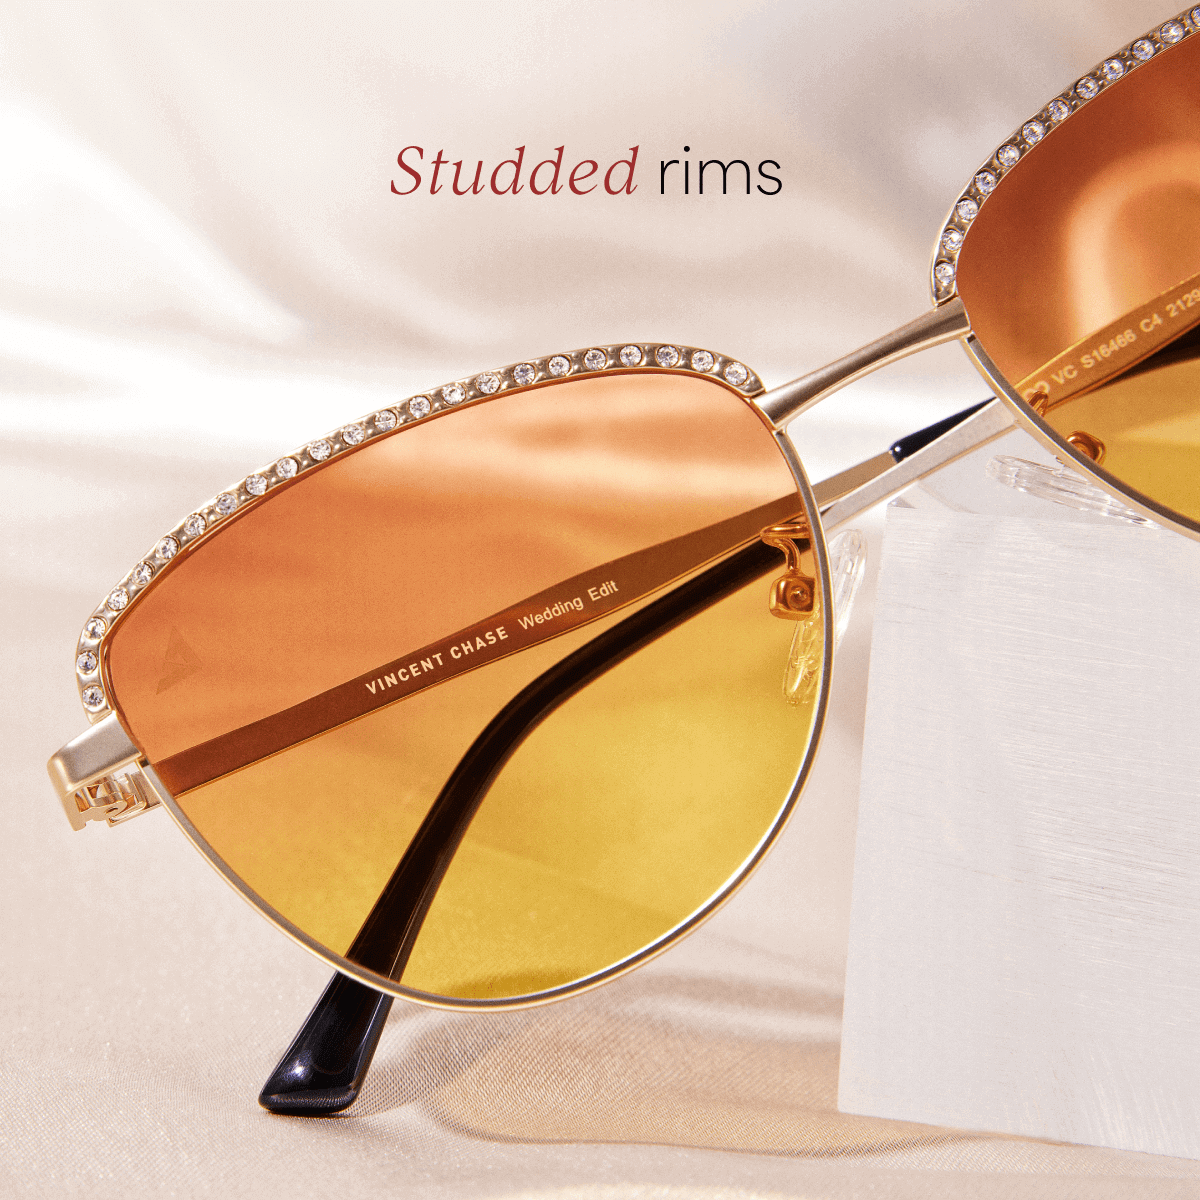 Ray Ban Sunglasses ® Online Store: Buy Original Ray Ban Sunglasses: AJIO